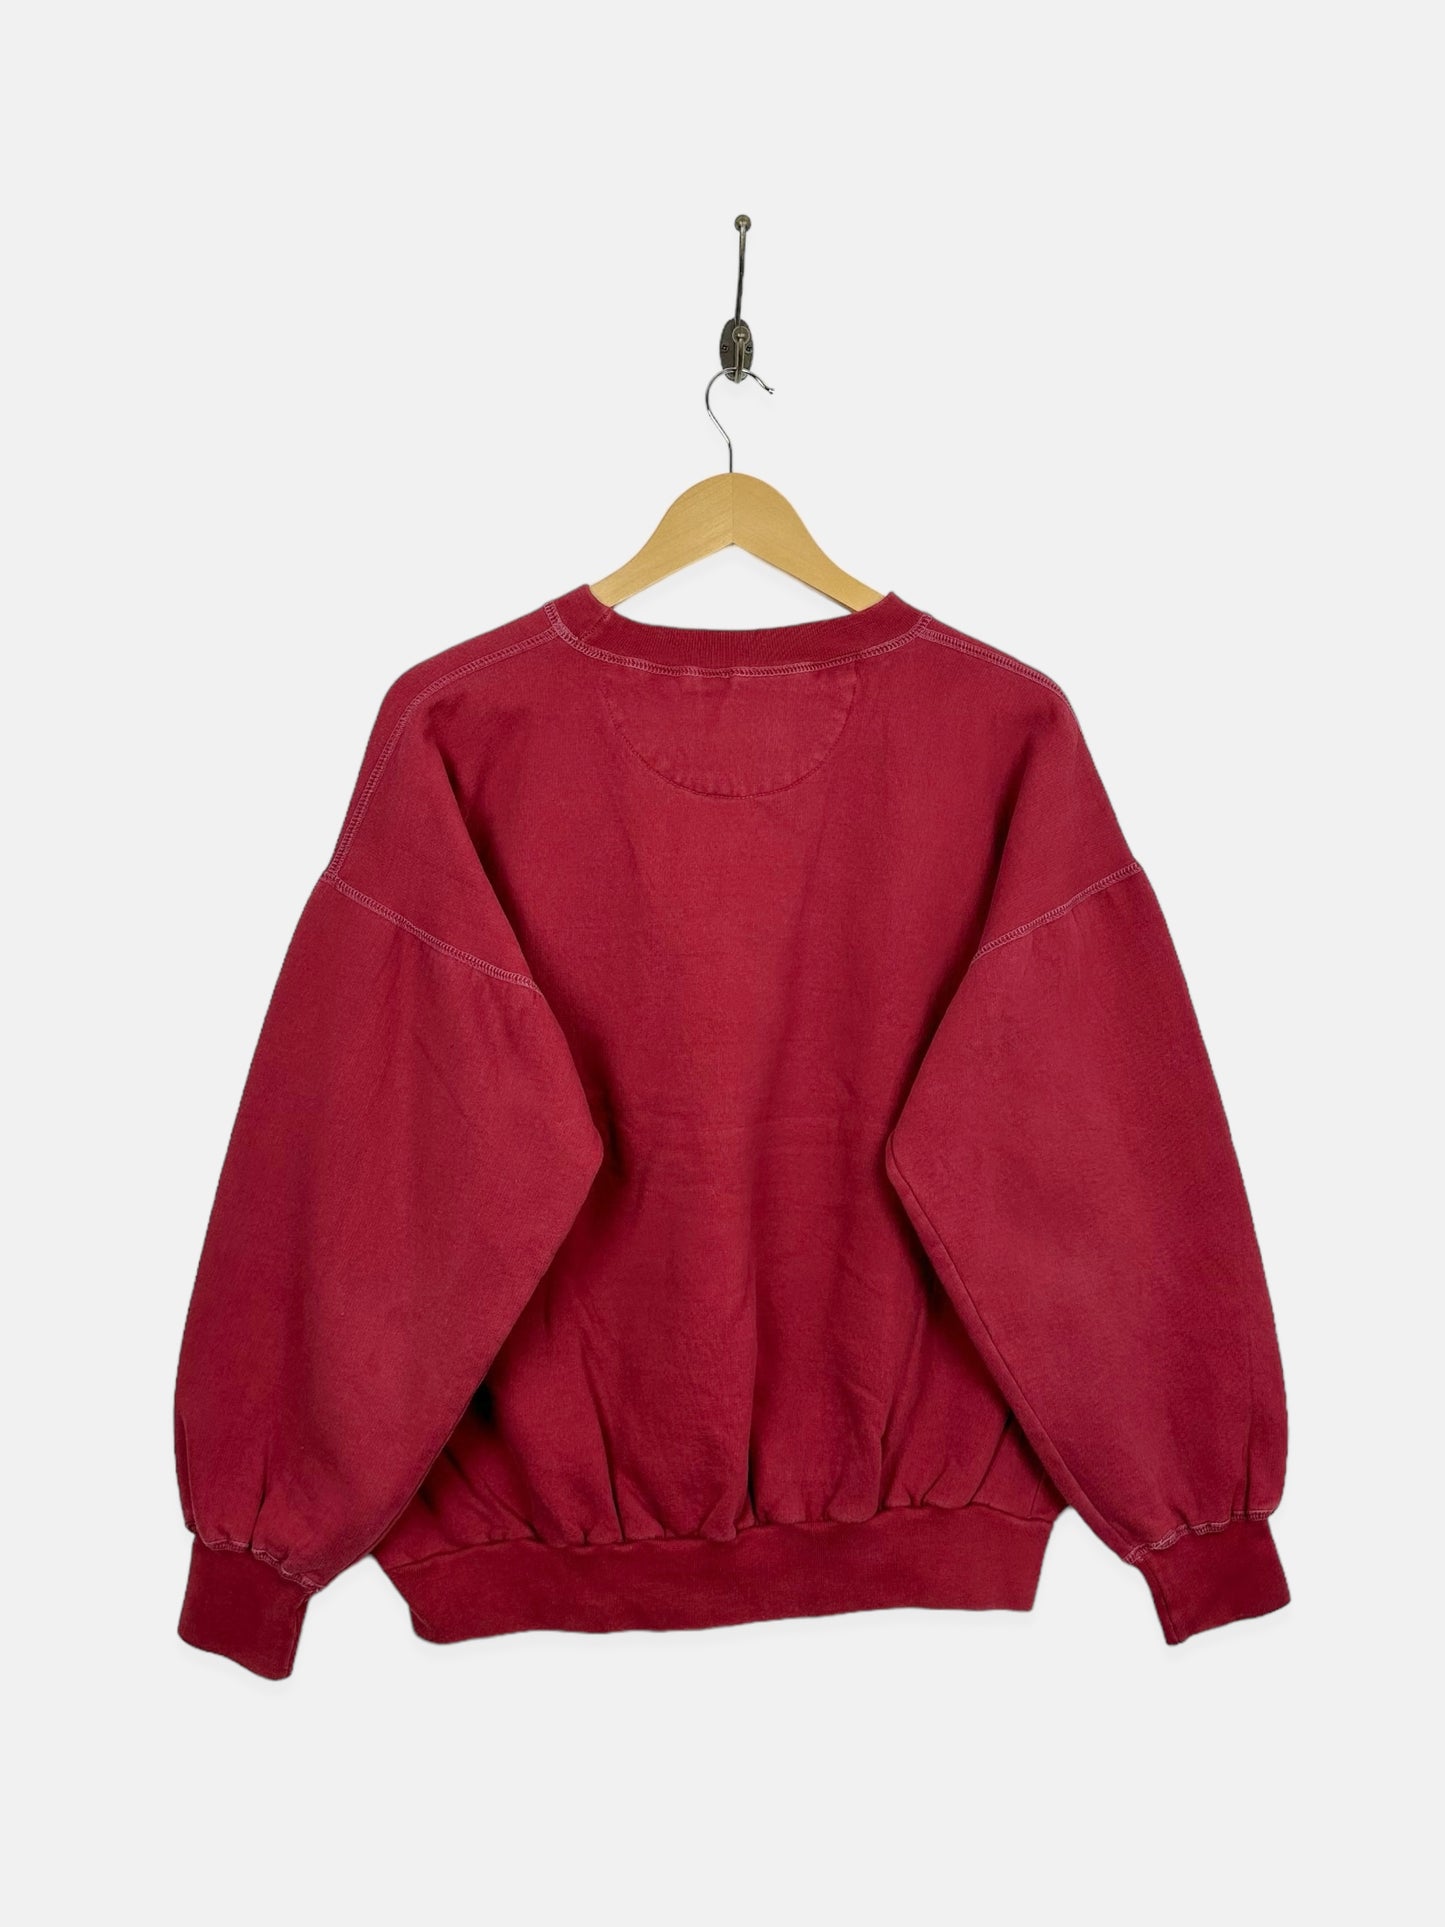 90's Chaps Ralph Lauren Embroidered Vintage Sweatshirt Size S